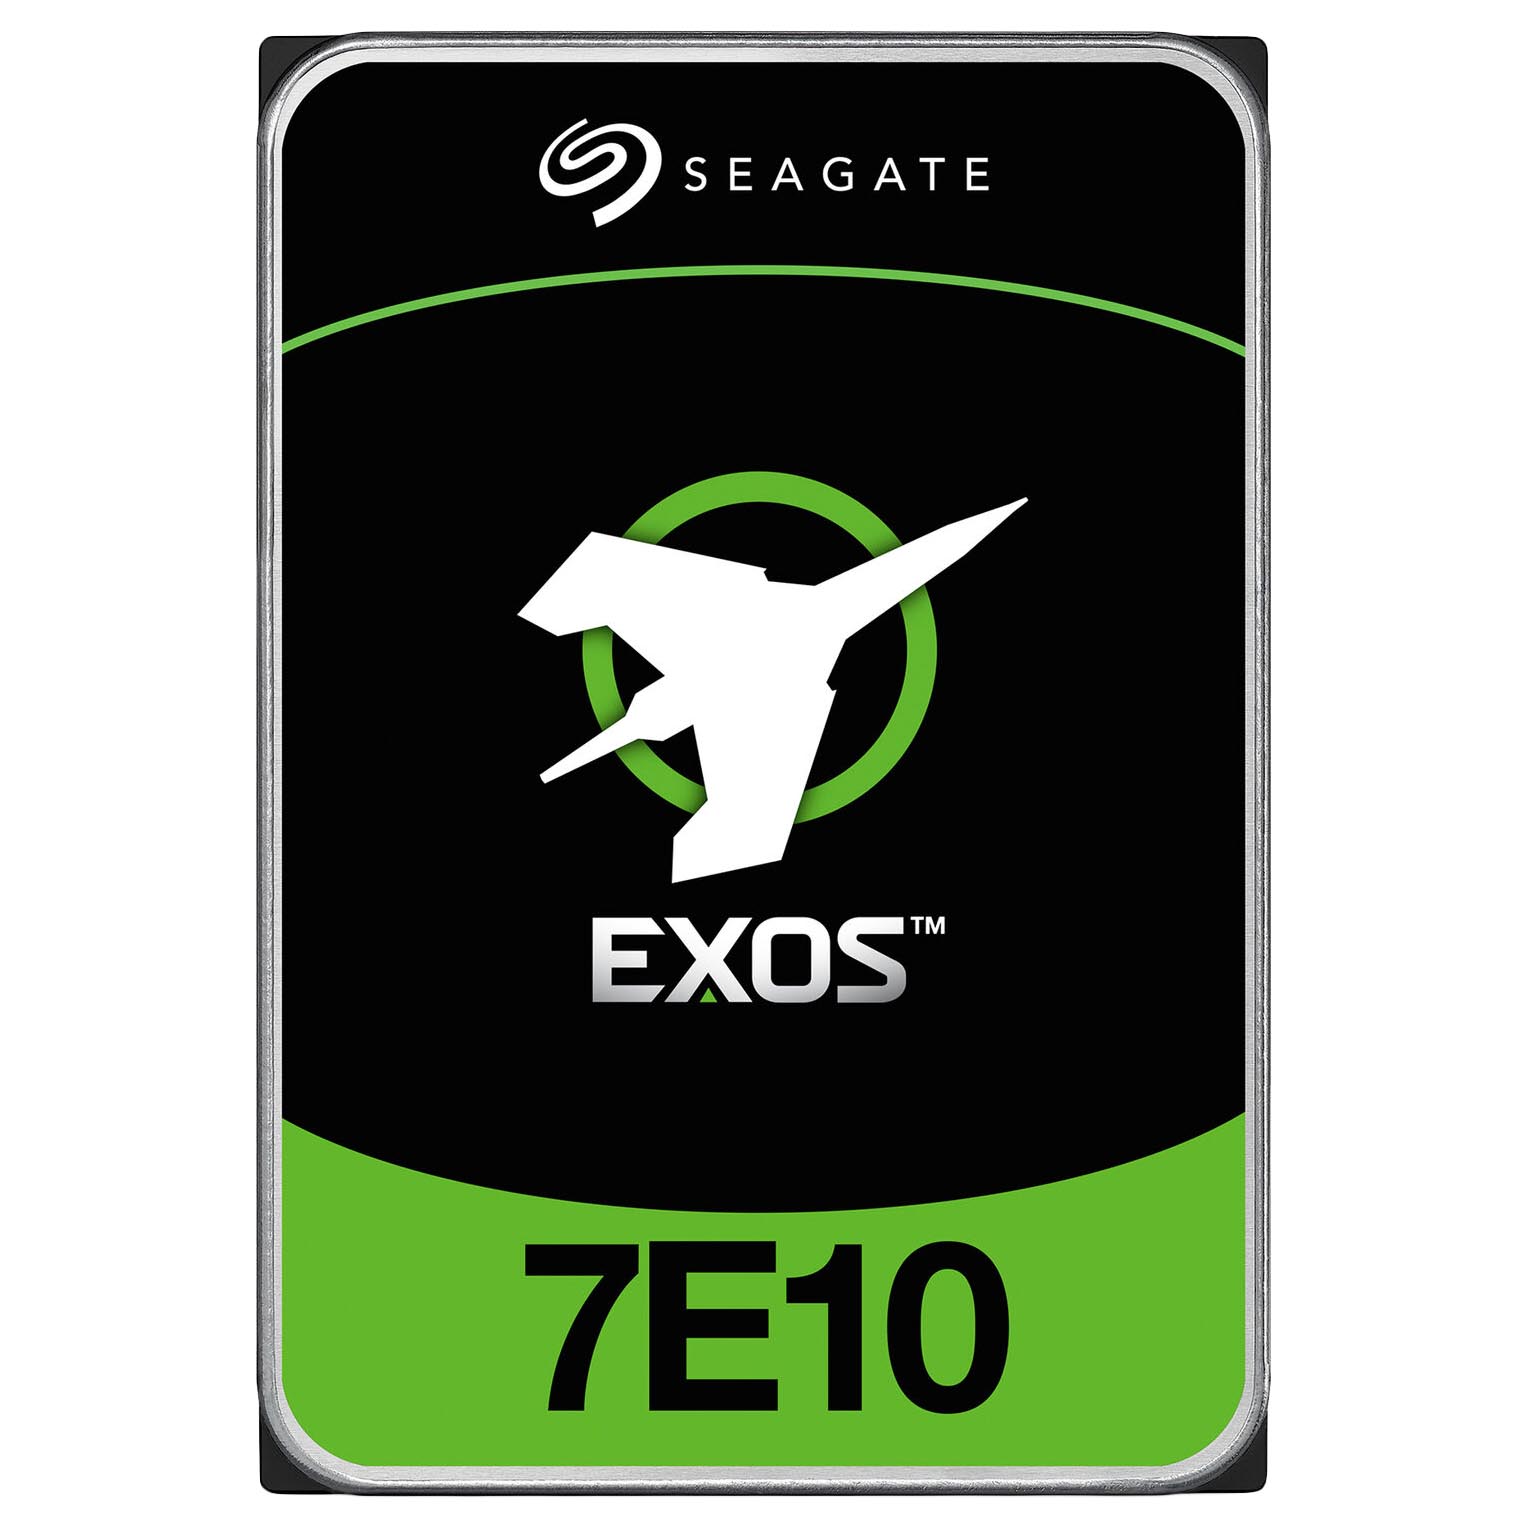 Внутренний жесткий диск Seagate Exos 7E10, ST10000NM017B, 10 Тб жесткий диск серверный 3 5 10tb seagate exos 7e10 st10000nm017b